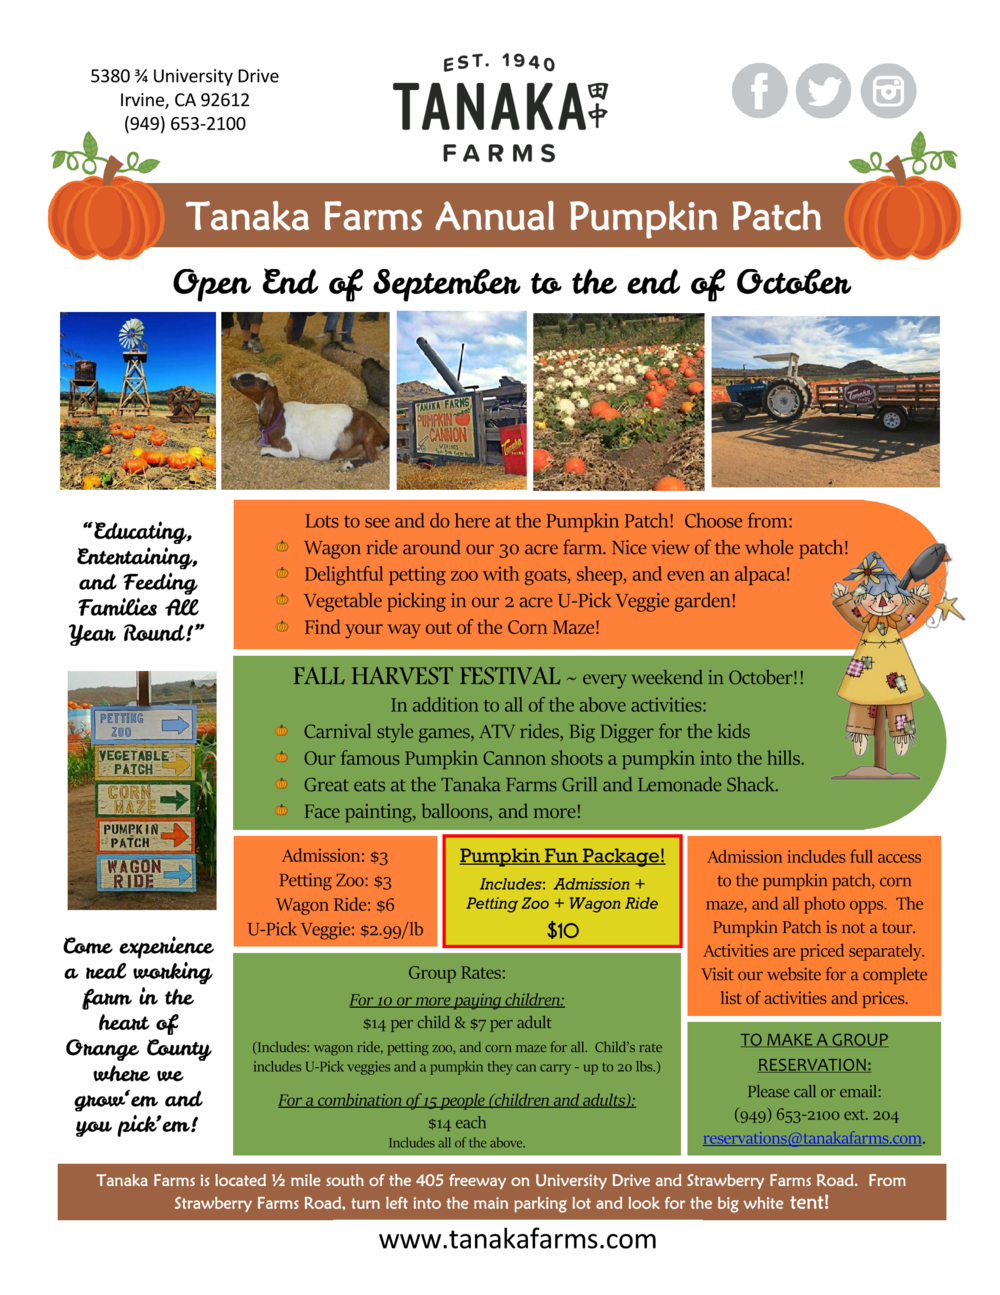 Tanaka Farms Annual Pumpkin Patch Irvine Macaroni Kid Yorba Linda Fullerton Placentia Anaheim Hills